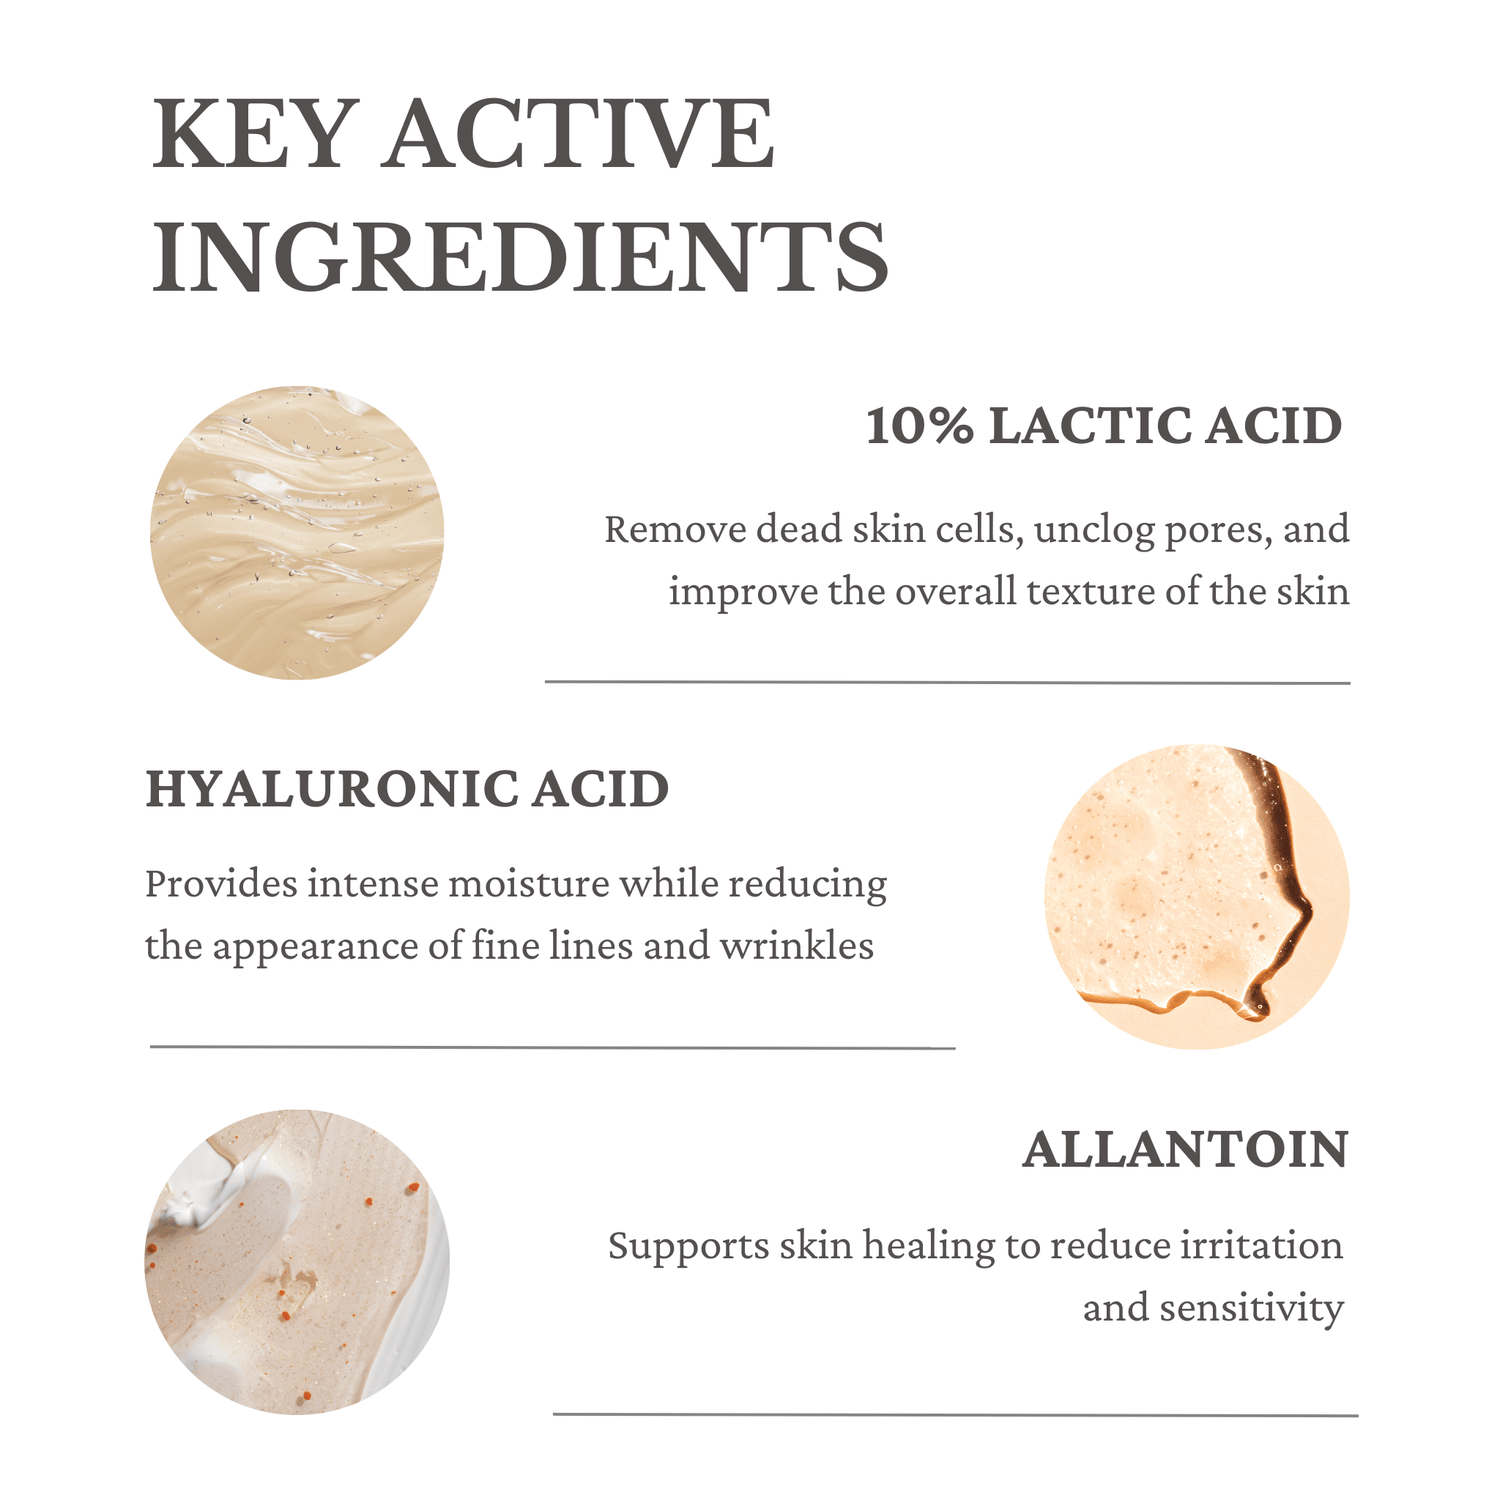 10% Lactic Acid + HA Serum key active ingredients from Ecladerm